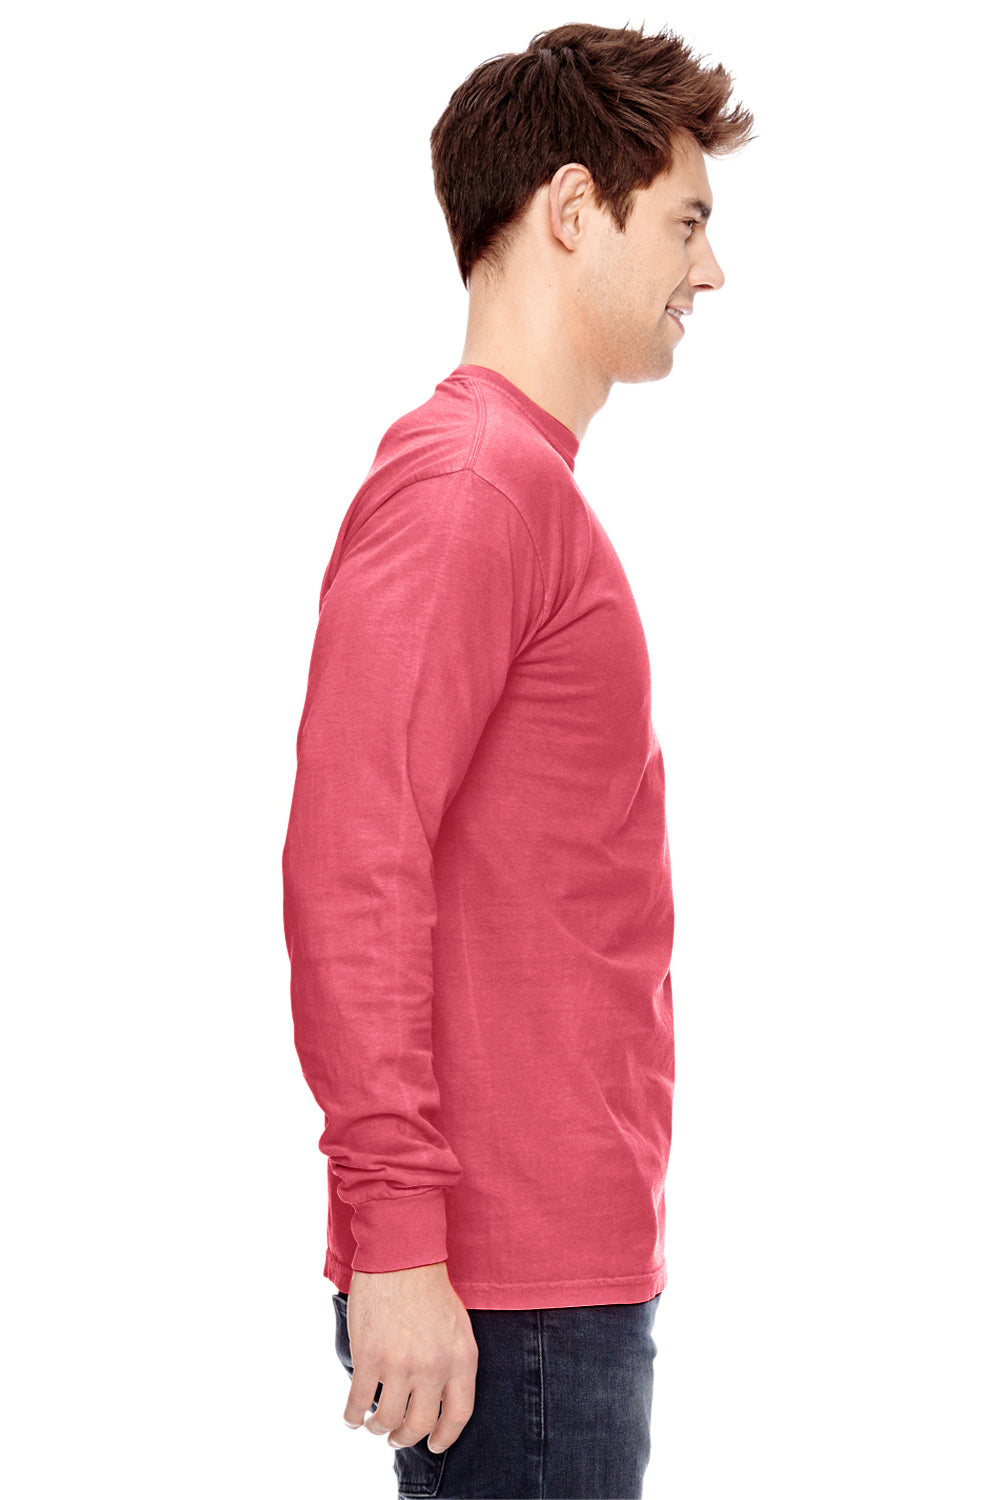 Comfort Colors C6014 Mens Long Sleeve Crewneck T-Shirt Watermelon Pink Side